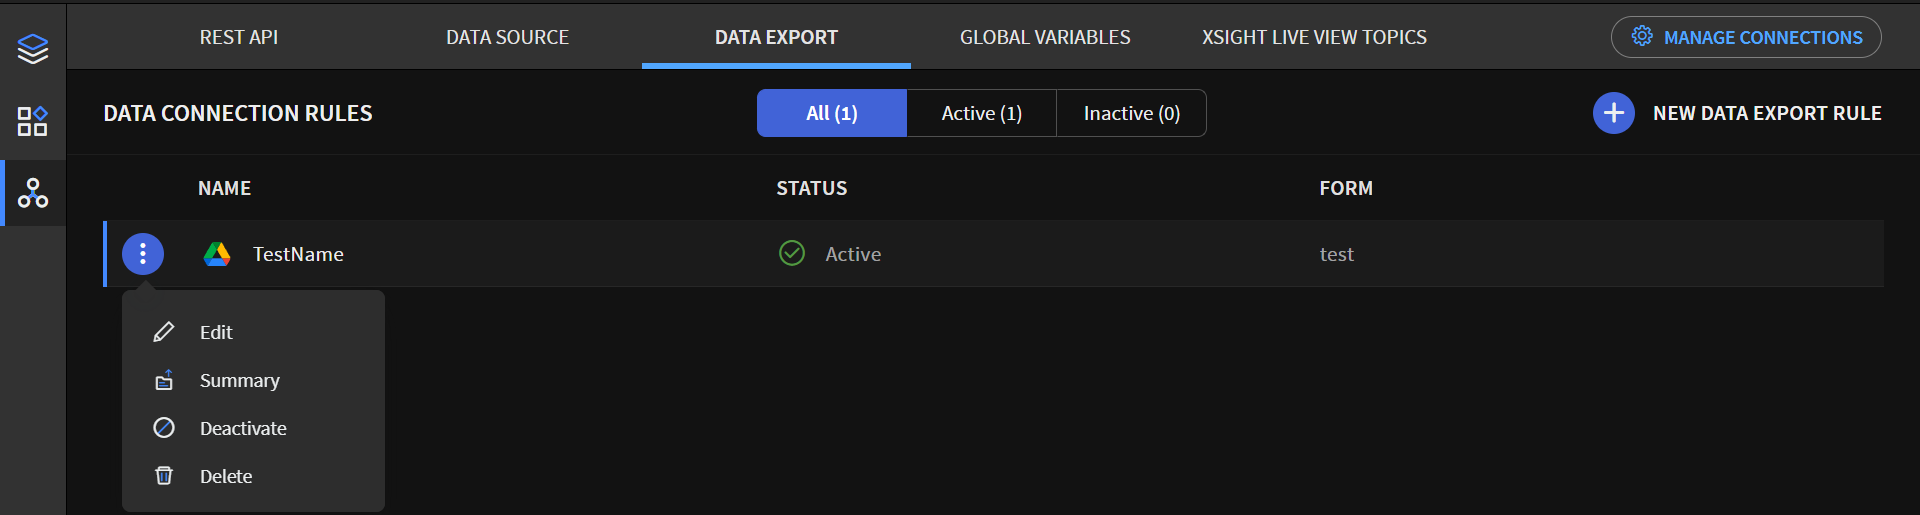 Data export tab